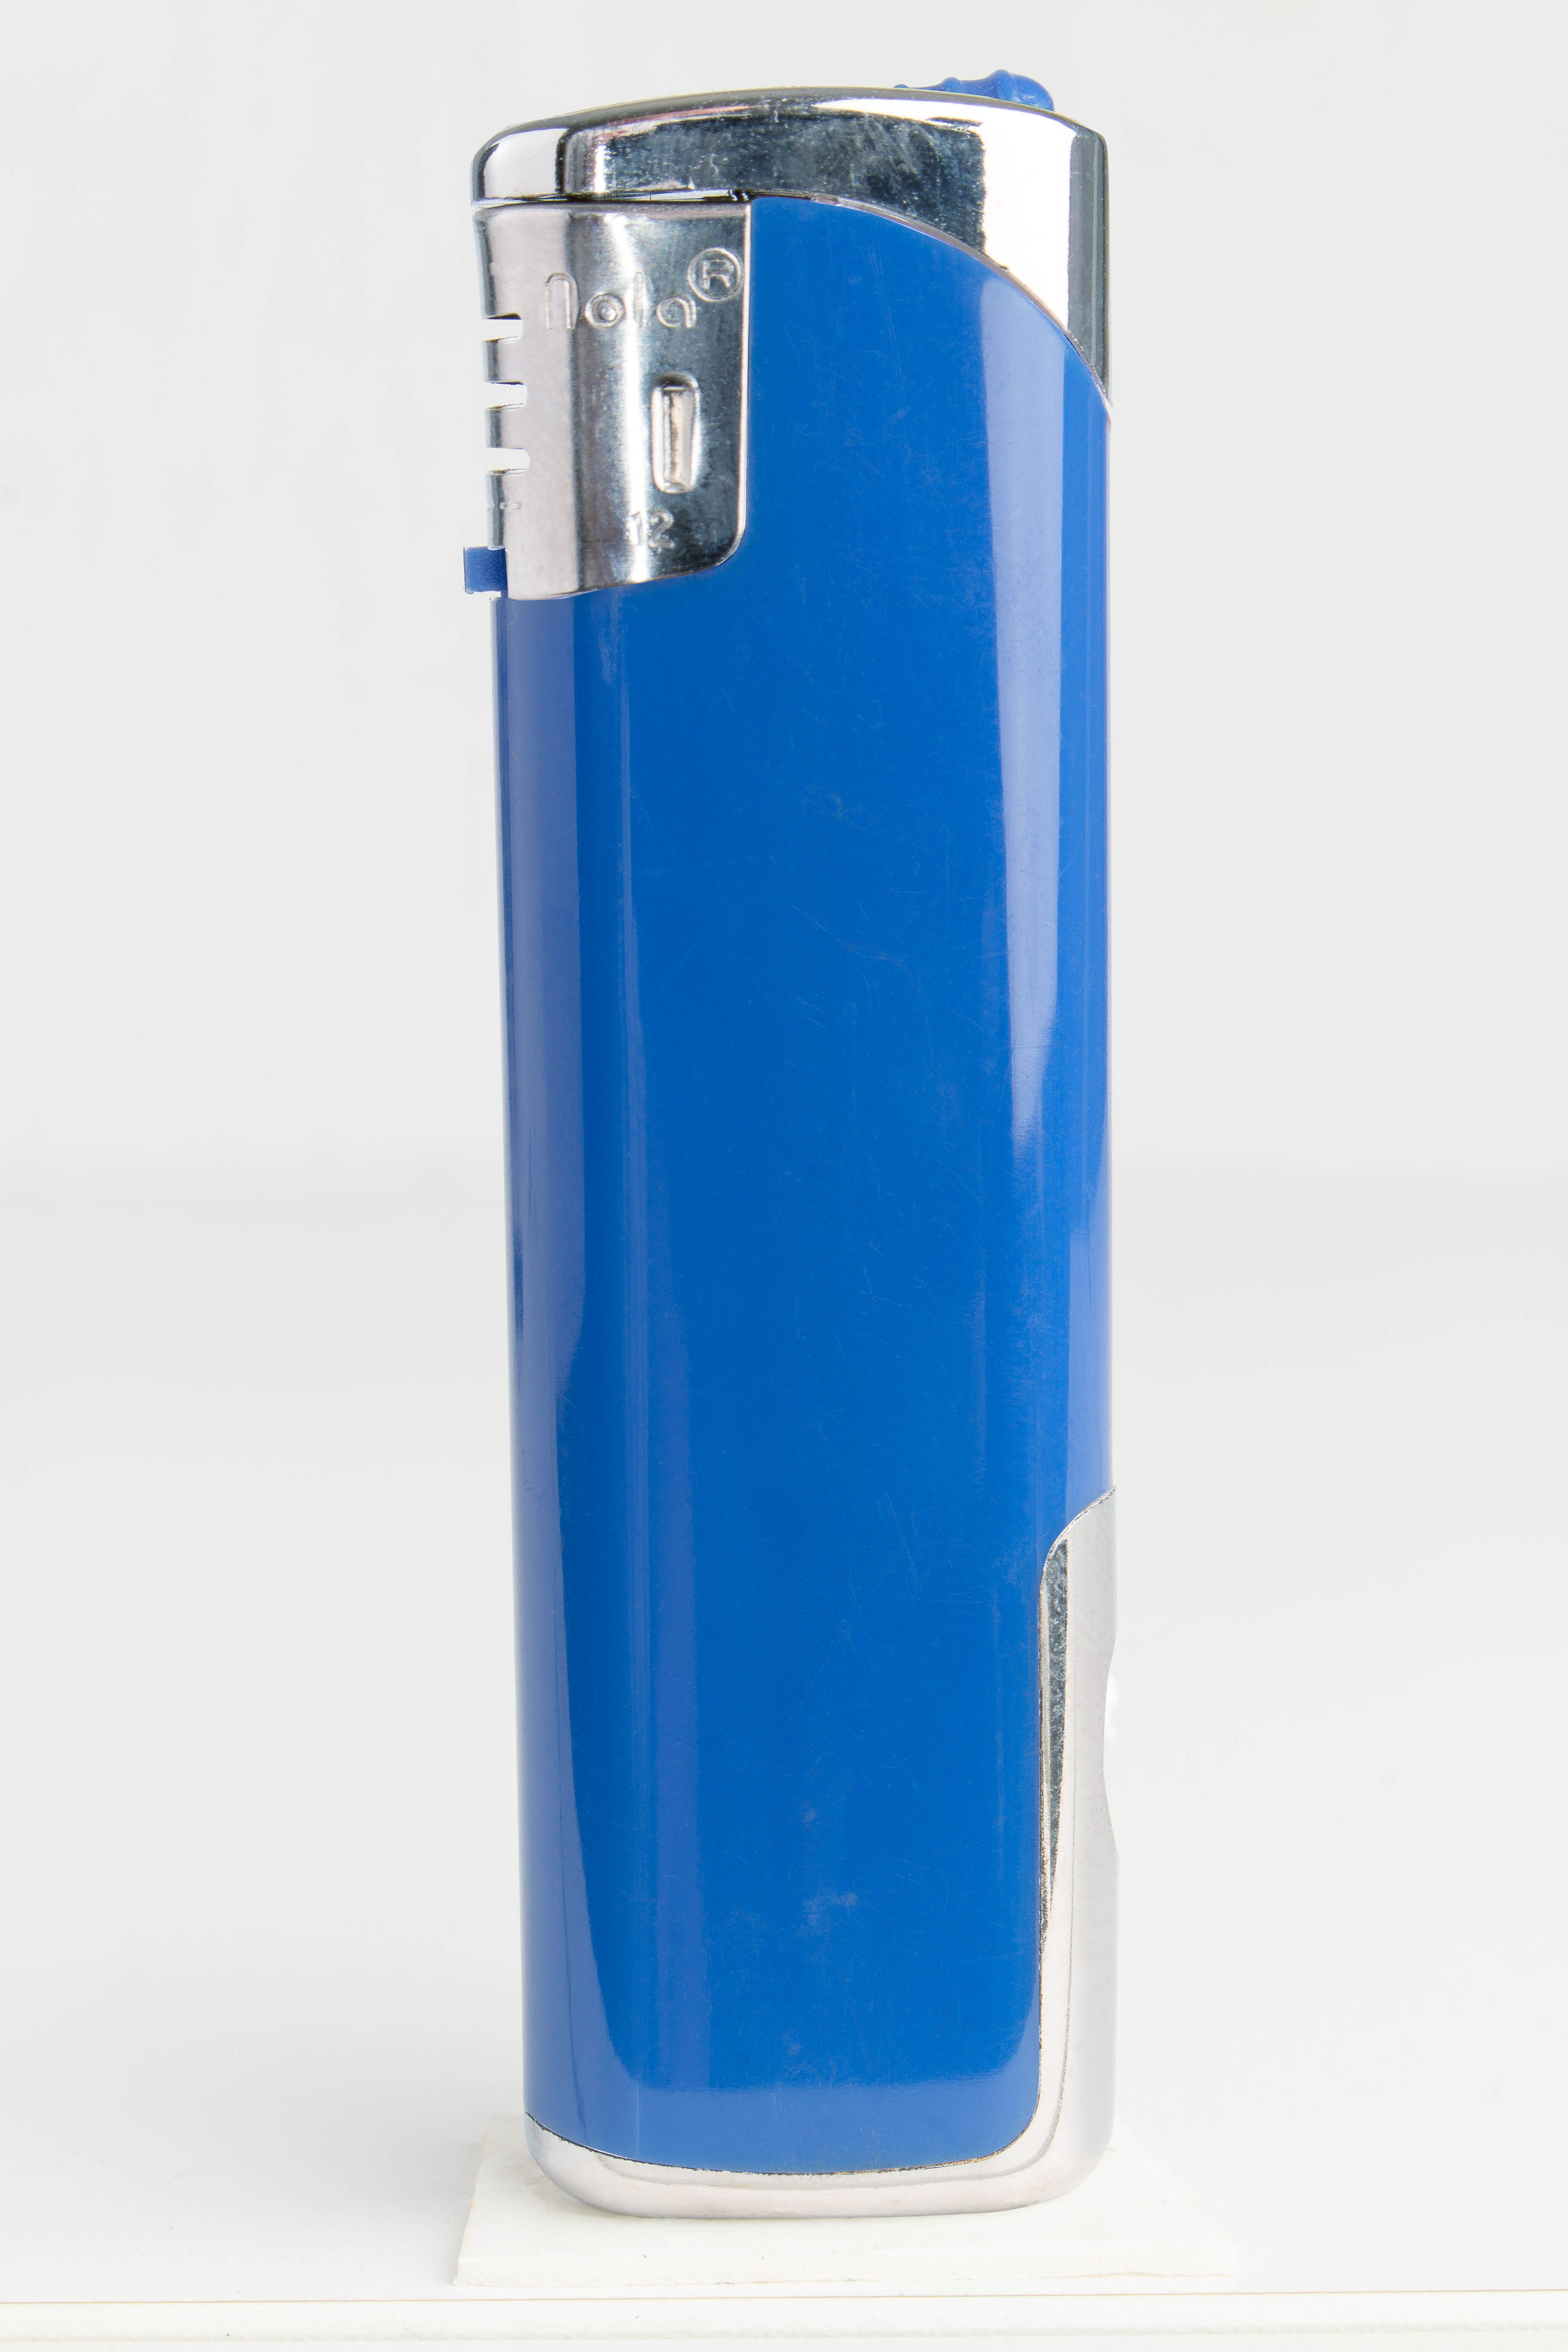 Nola 12 Elektronik Feuerzeug LED blau nachfüllbar glänzend blau, Kappe und Drücker chrom mit blau